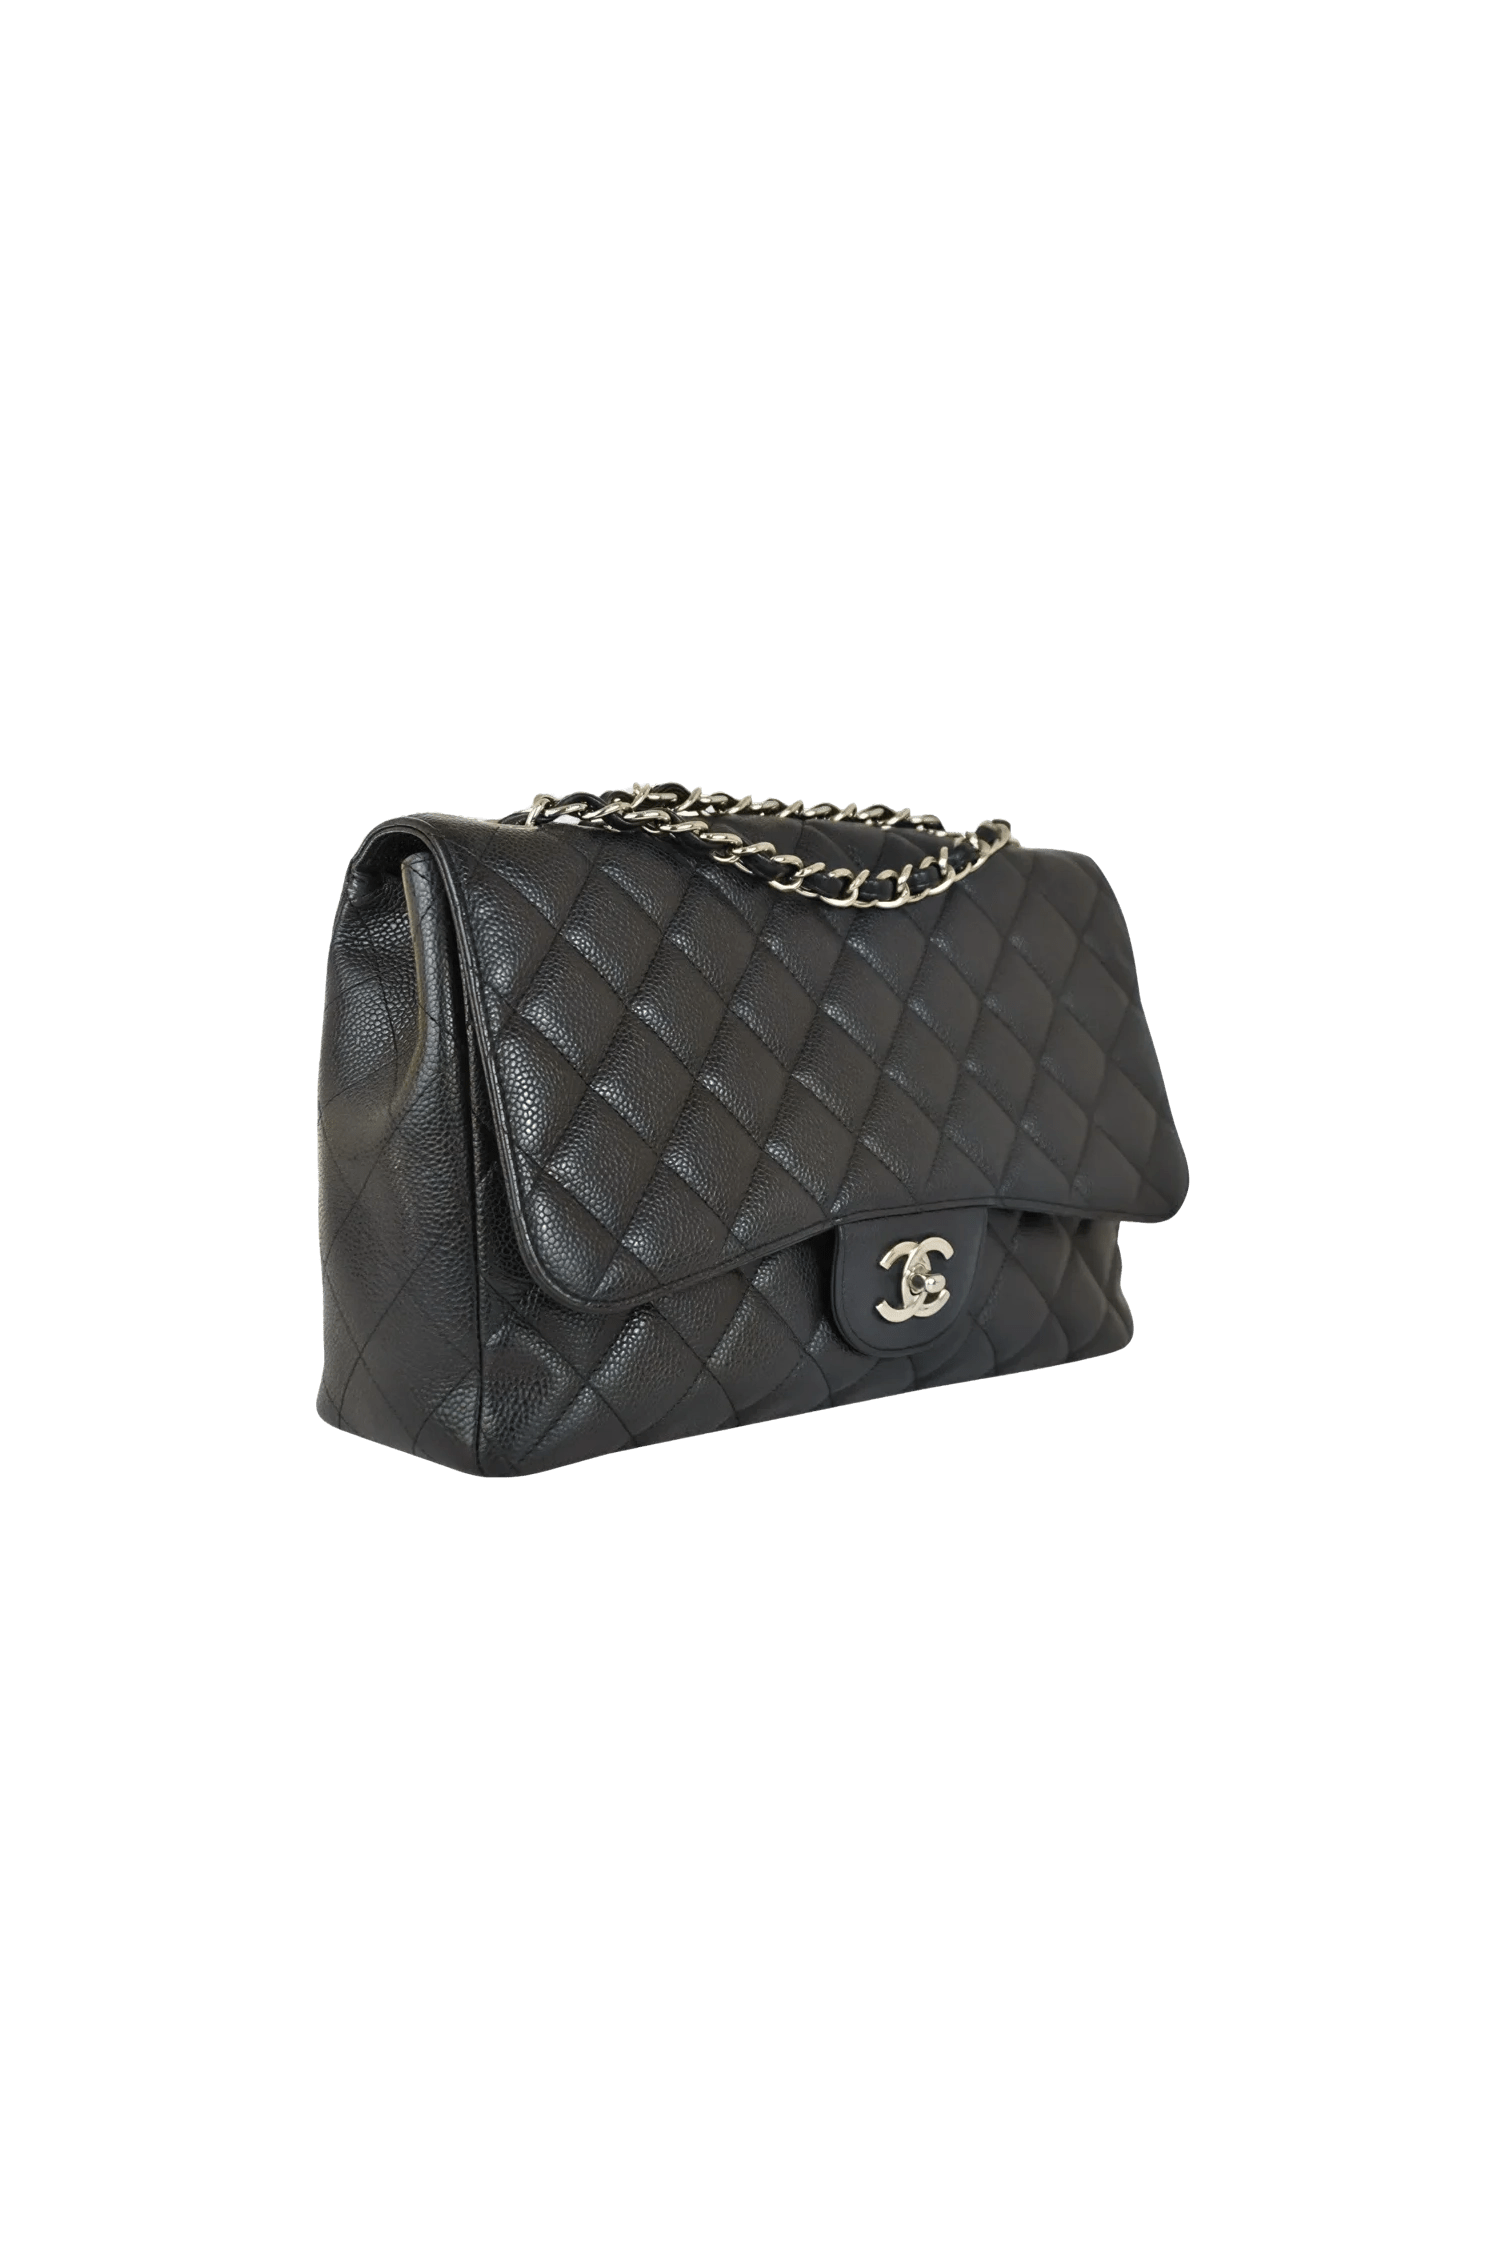 Chanel Jumbo Caviar Single Flap Bag SHW 2009-2010 - Foxy Couture Carmel